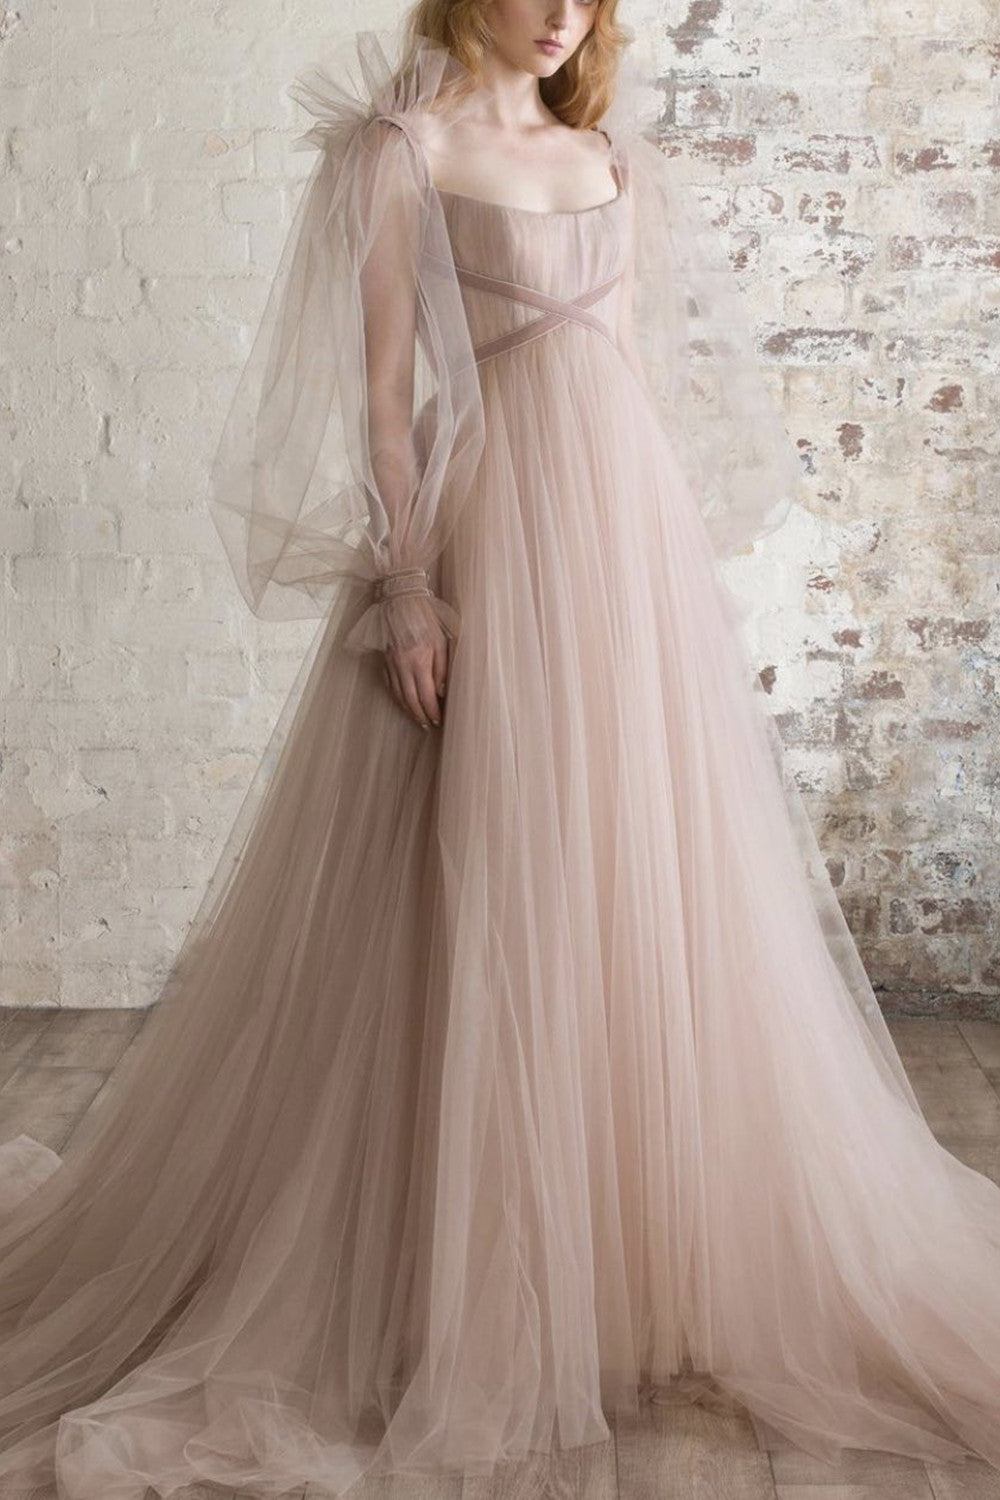 Elegant Long Sleeves 2021 Prom Dresses, A-line Tulle Long Prom Dresses, Popular Party Dresses